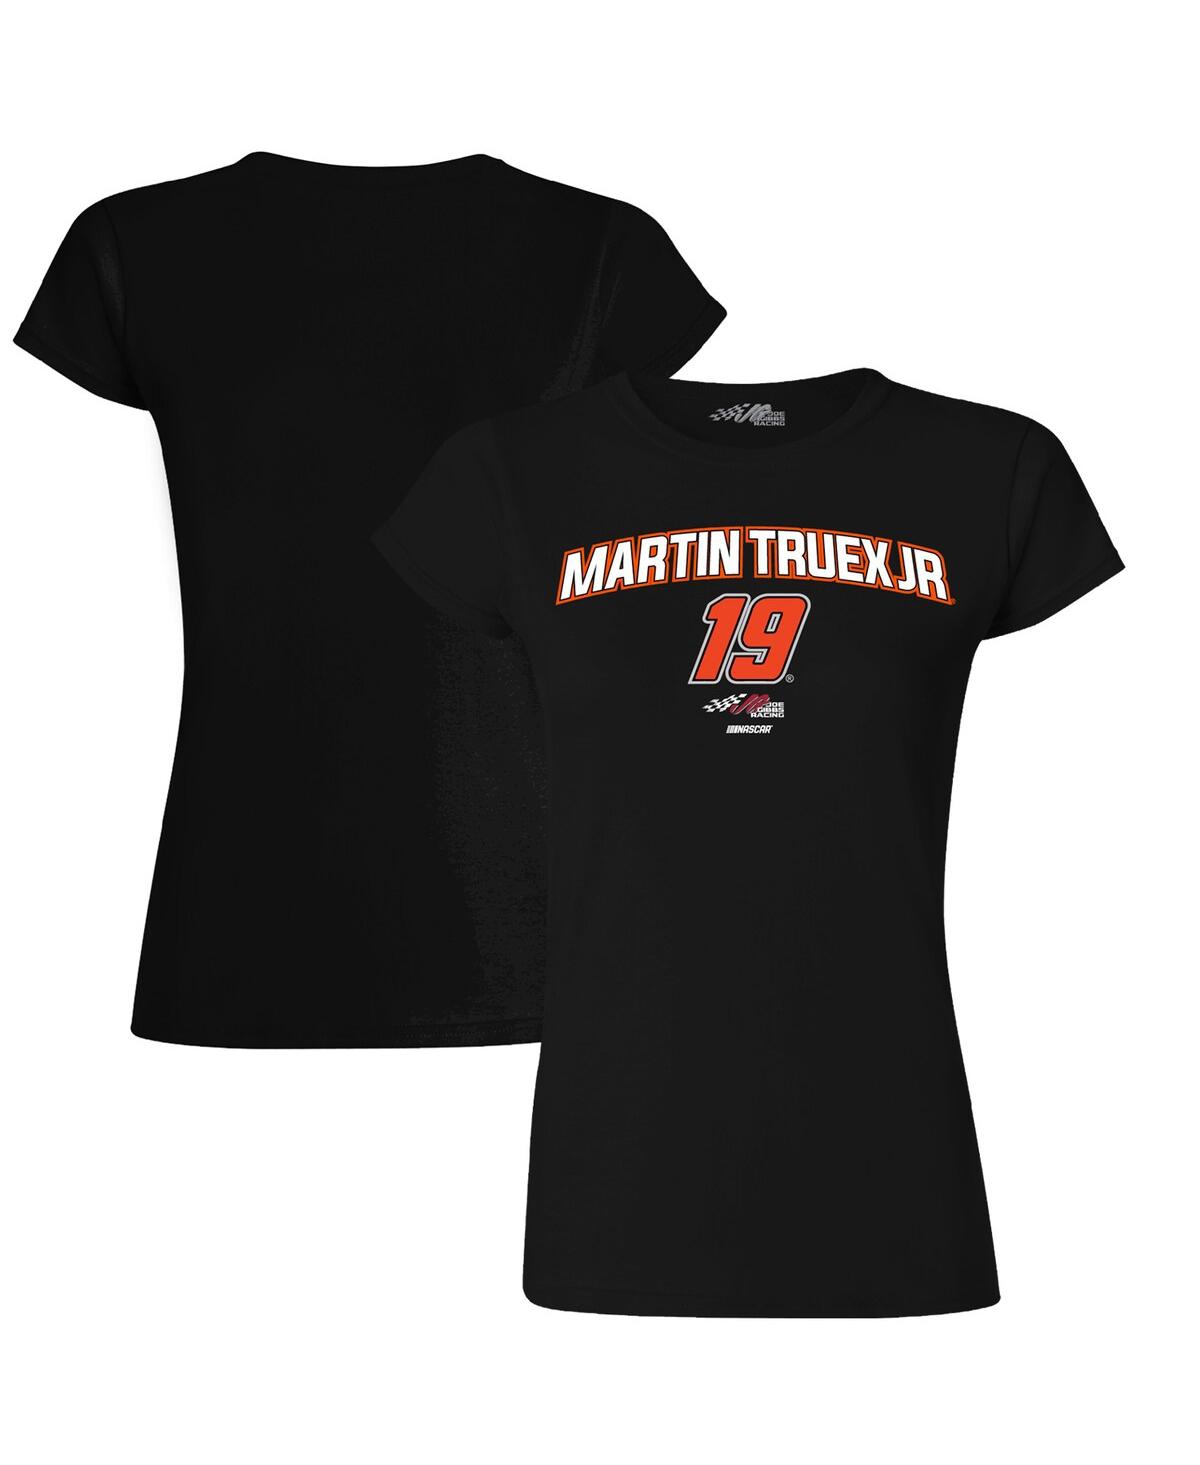 Women's Joe Gibbs Racing Team Collection Black Martin Truex Jr Rival T-shirt - Black